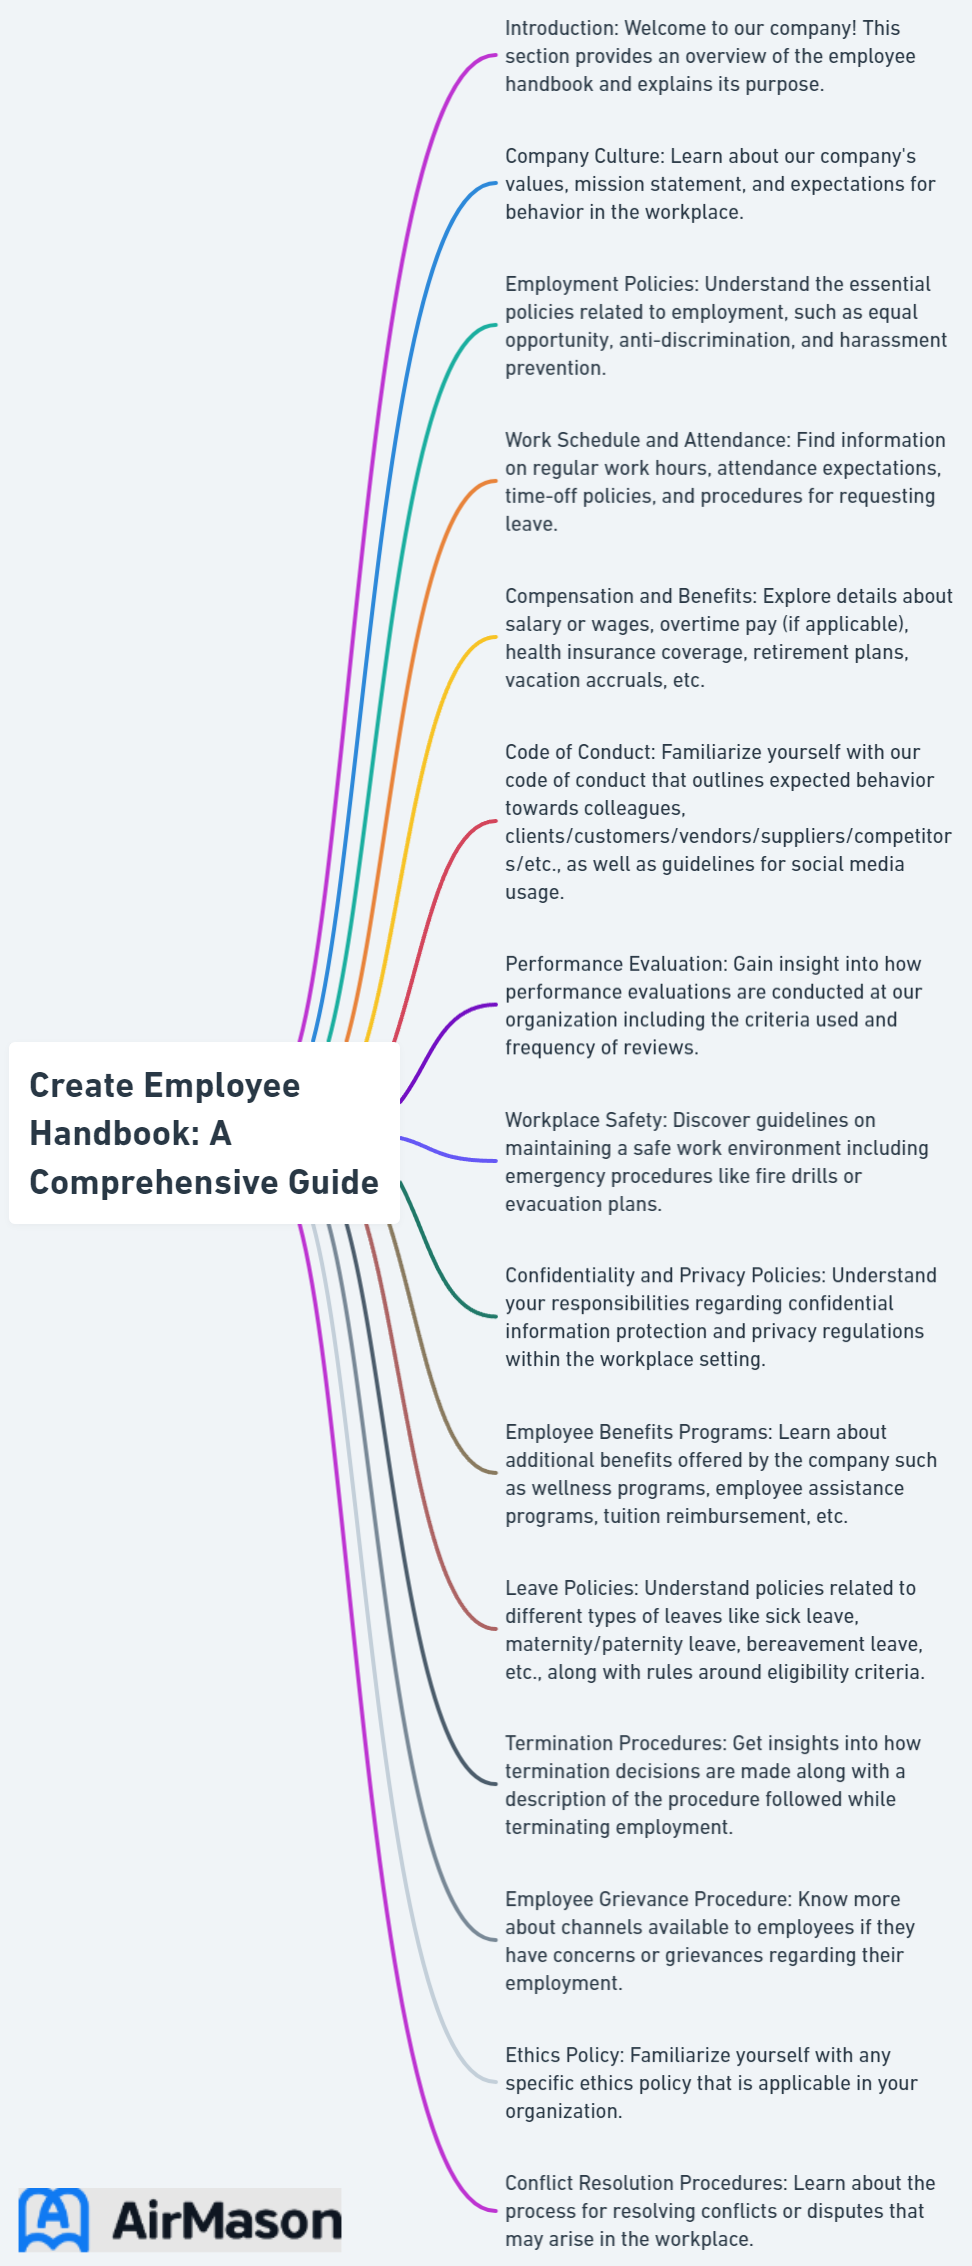 Create Employee Handbook: A Comprehensive Guide